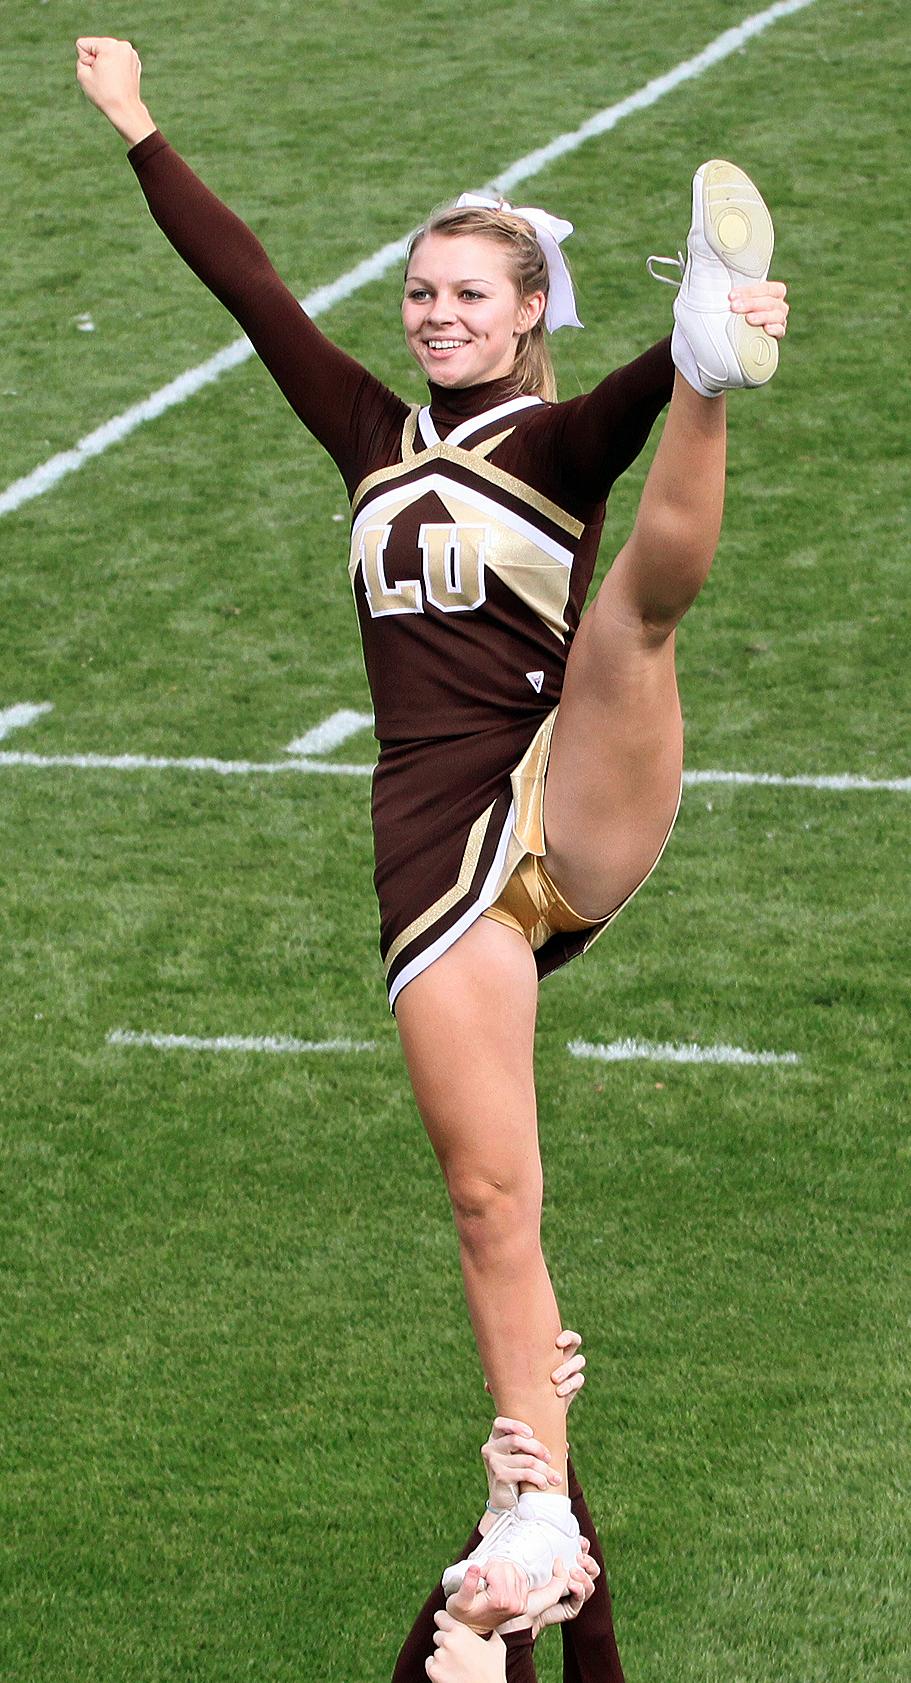 Cheerleader upskirt